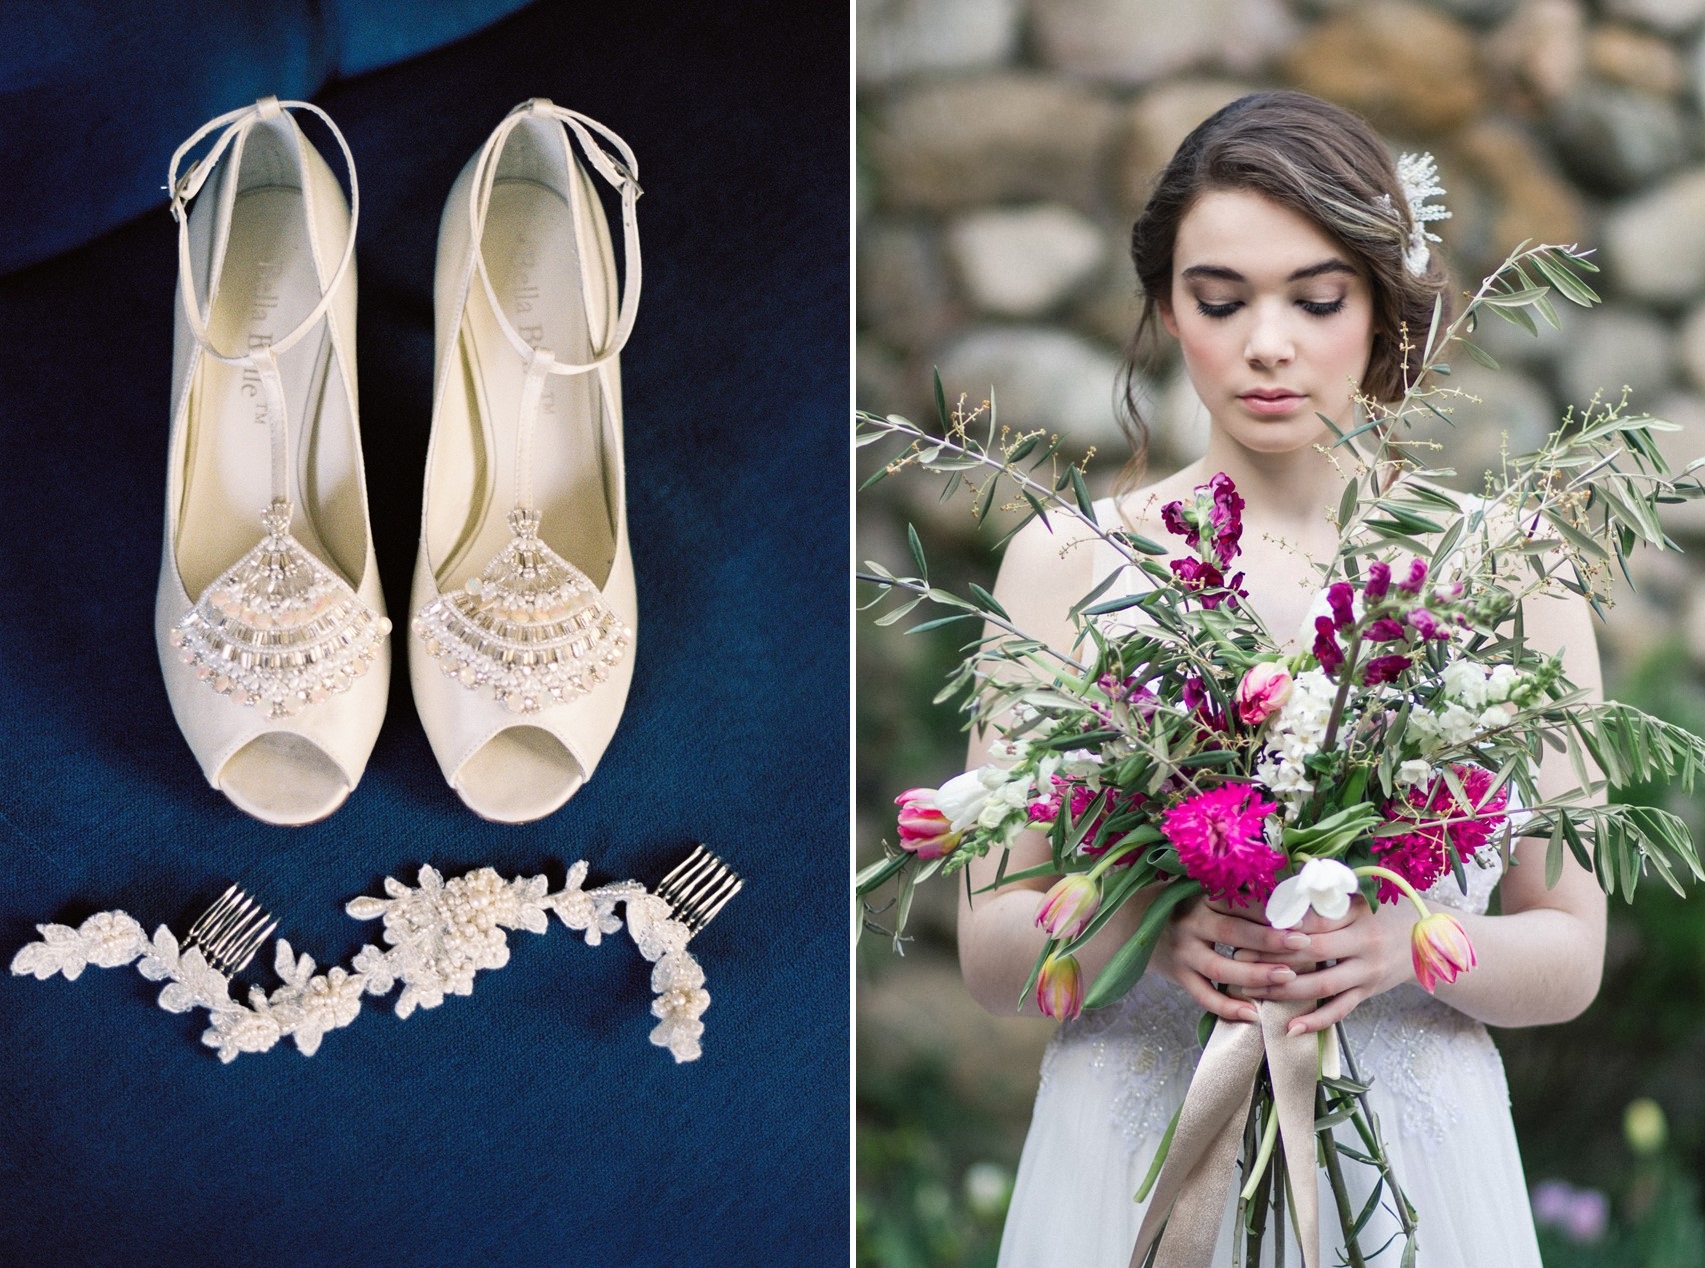 Bridal Shoes & Bridal Bouquet  - Romantic Al Fresco Wedding Ideas Inspired by Tuscany